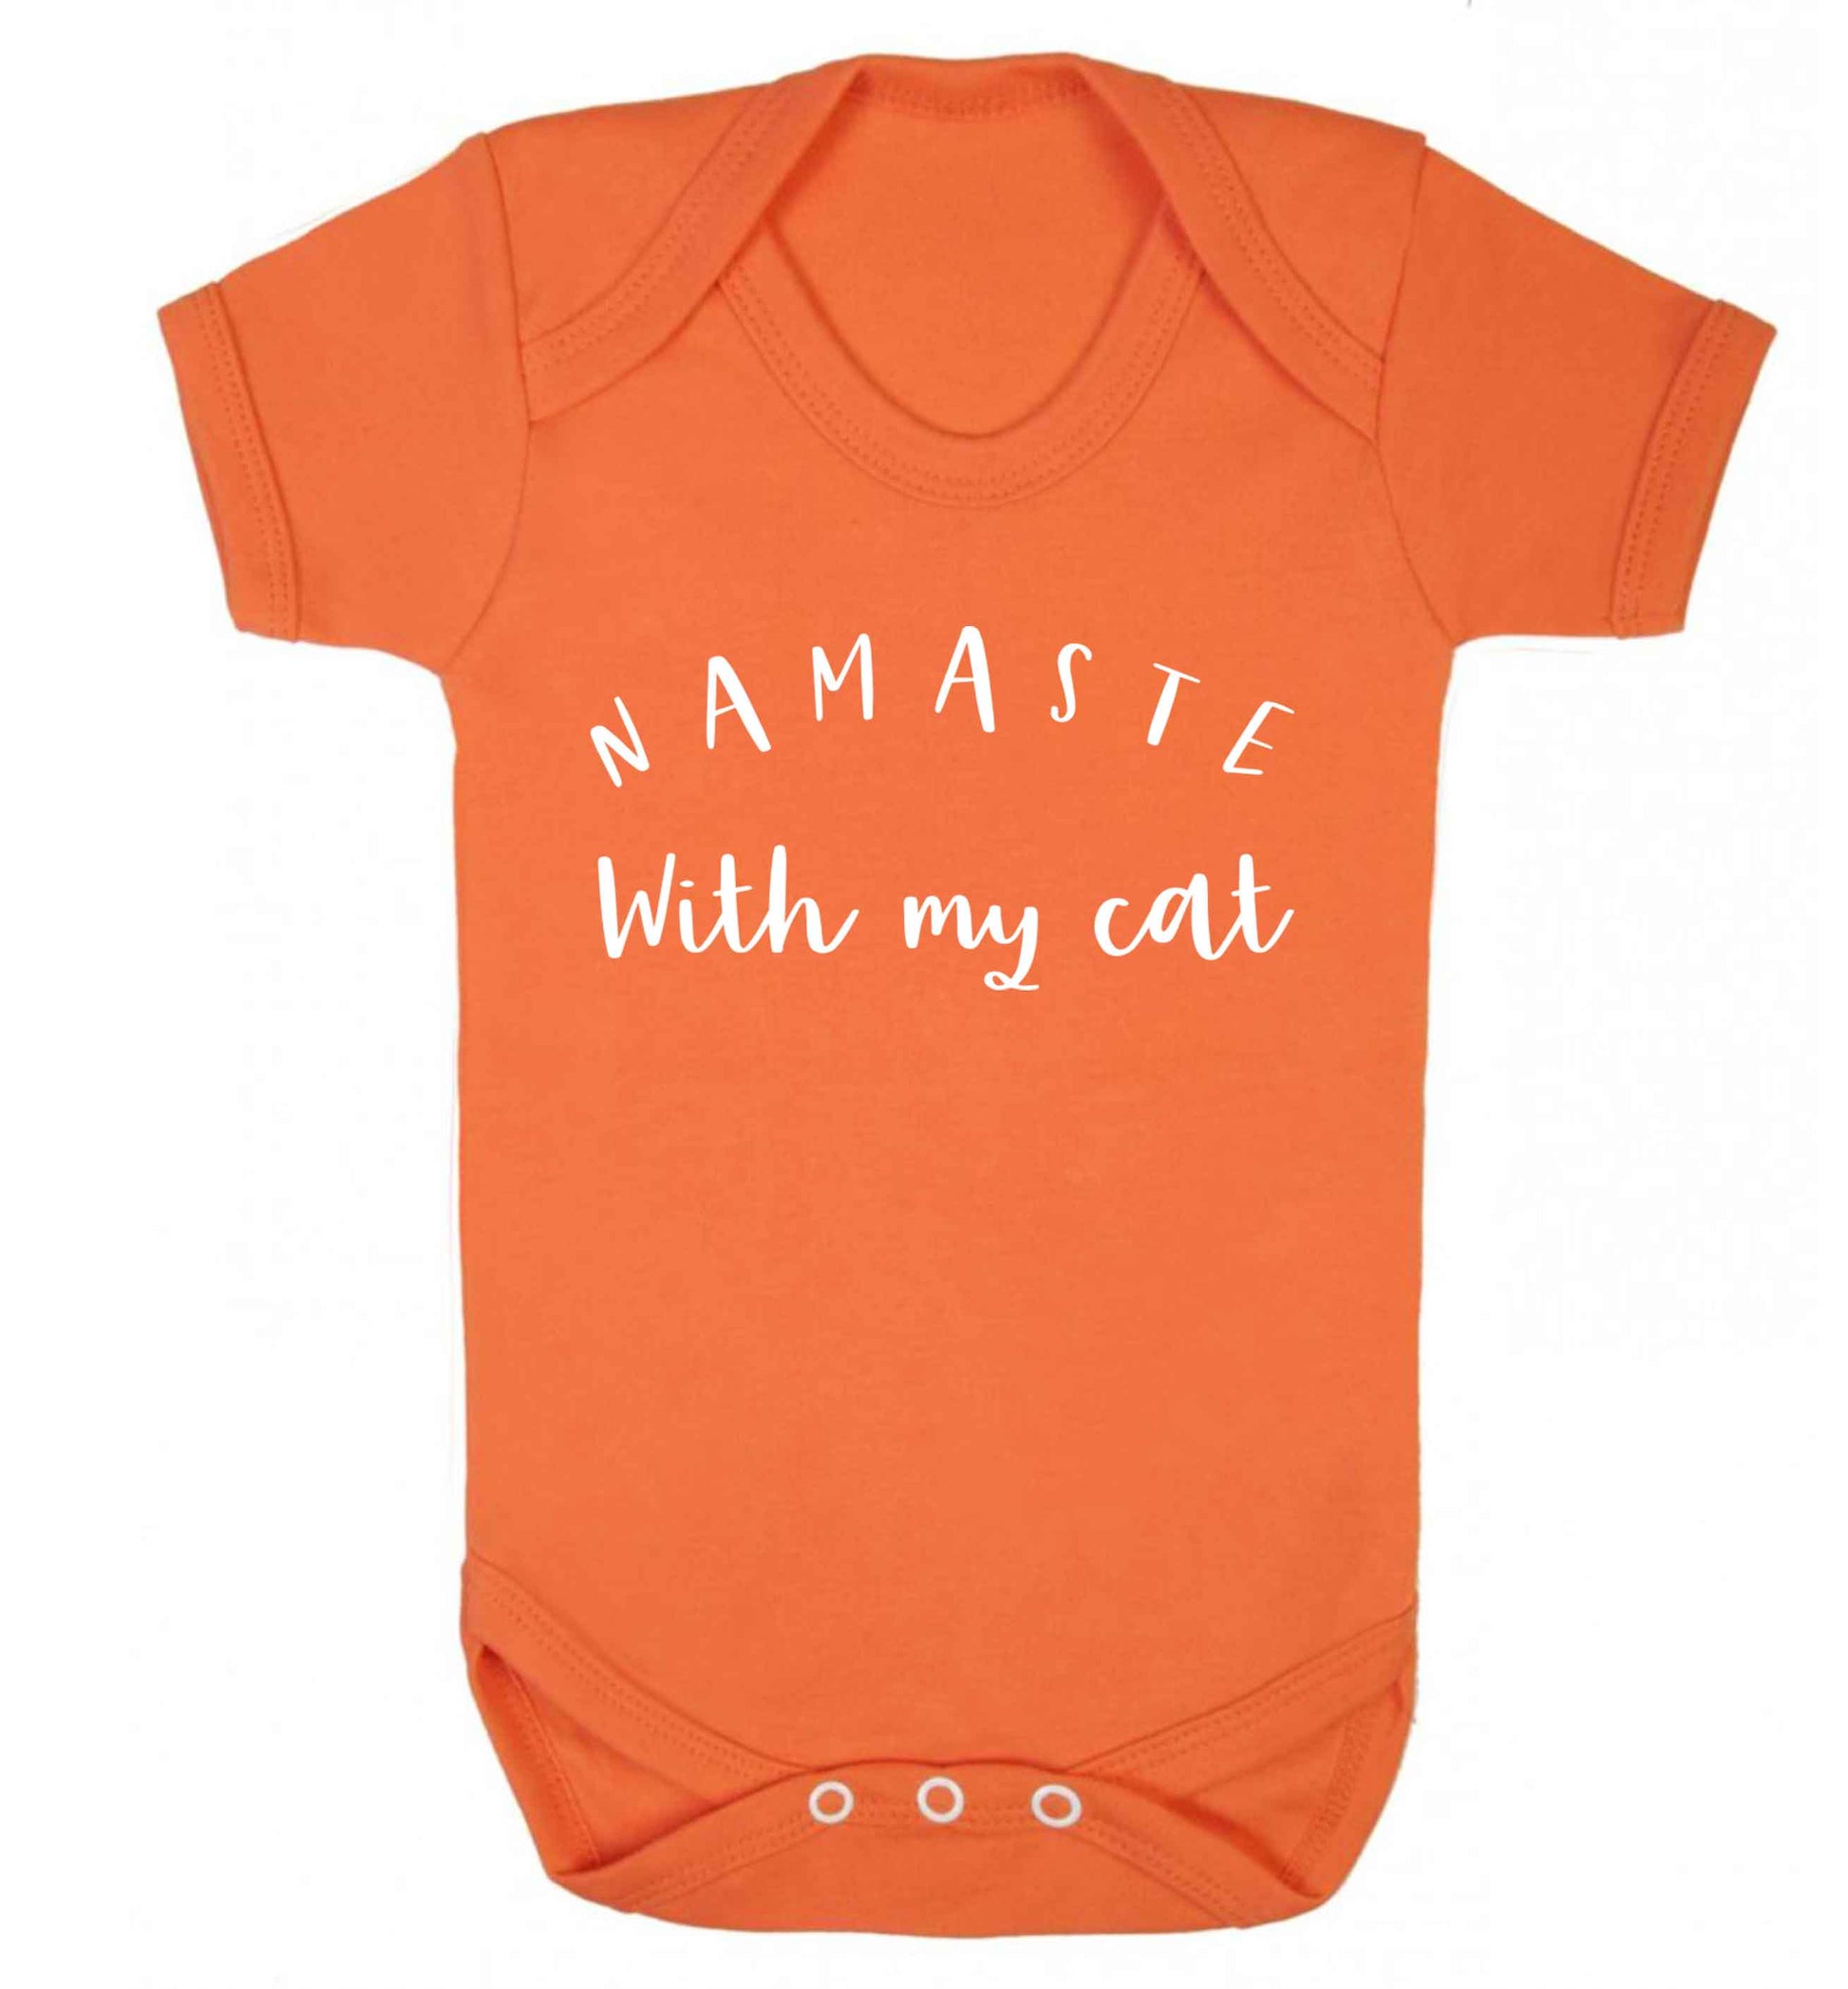 Namaste with my cat Baby Vest orange 18-24 months